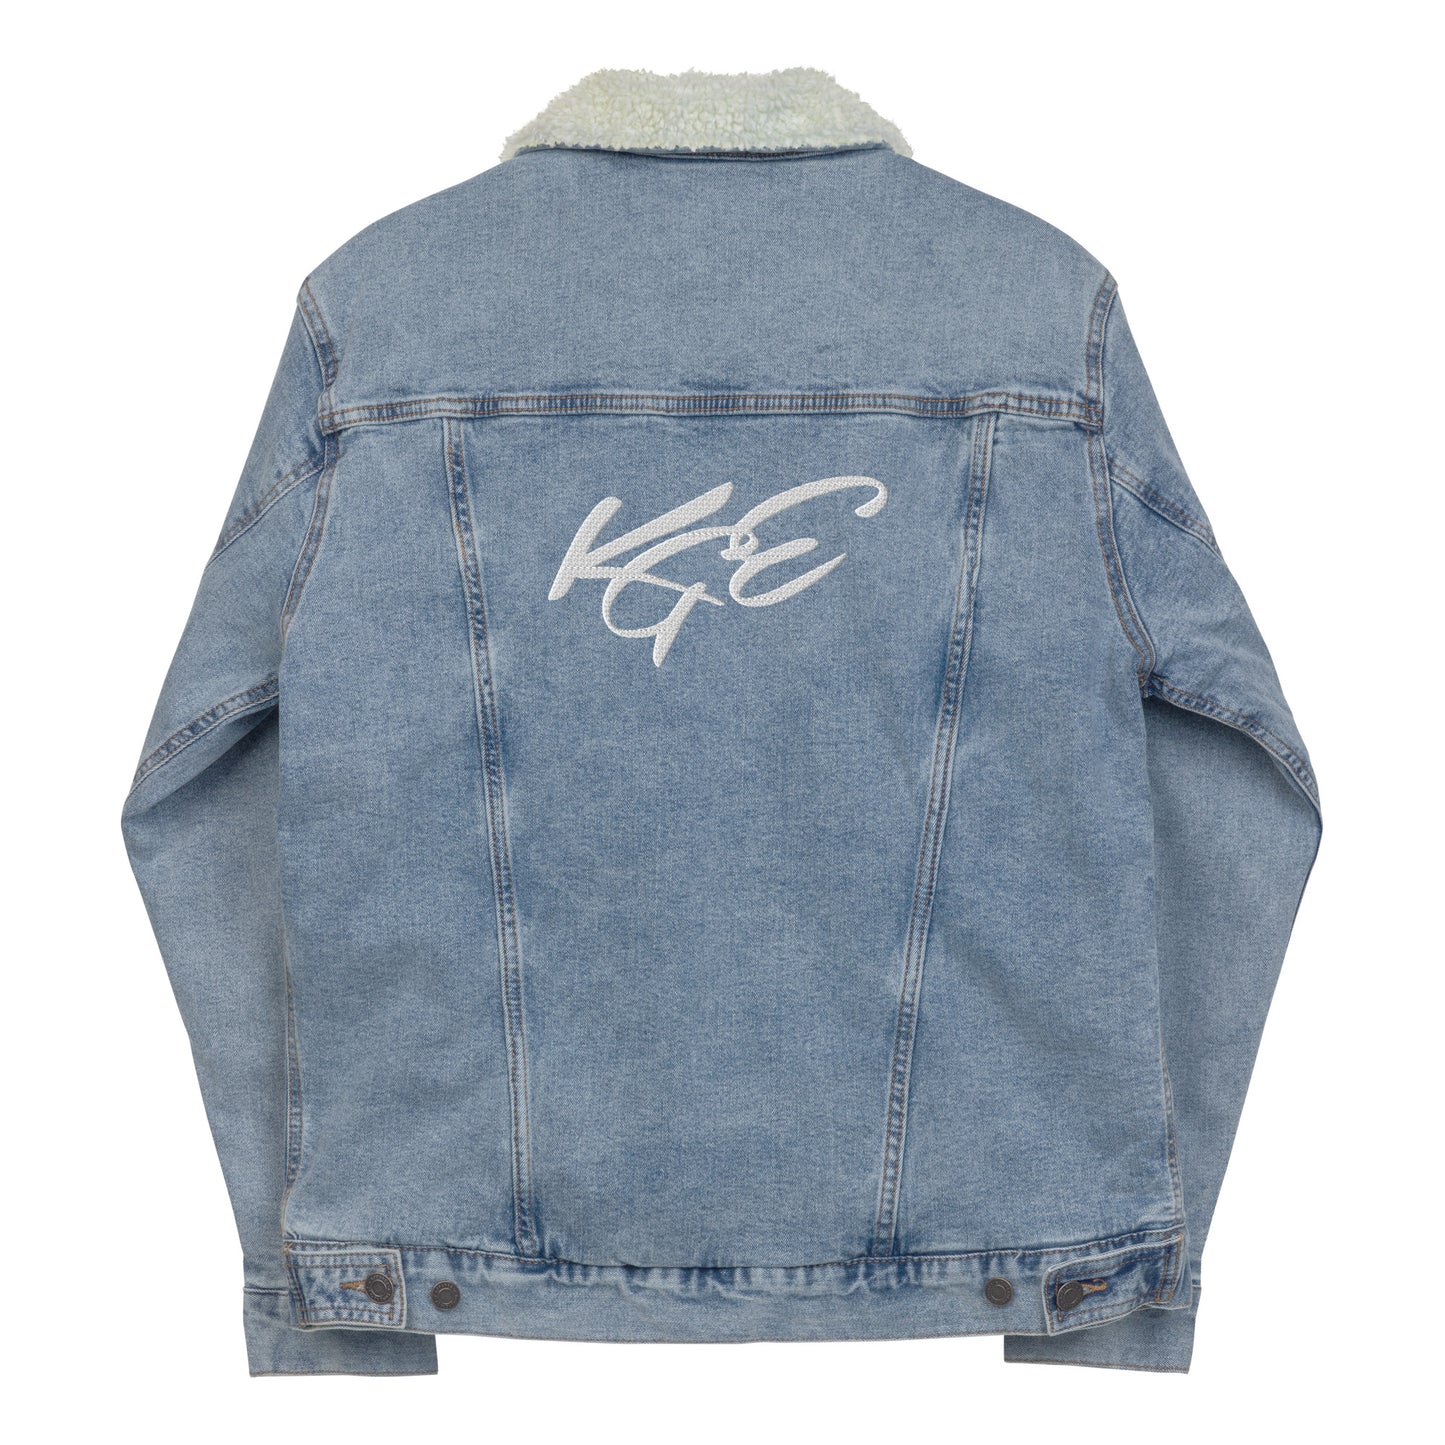 KGE signature brand embroidery denim eco sherpa jacket